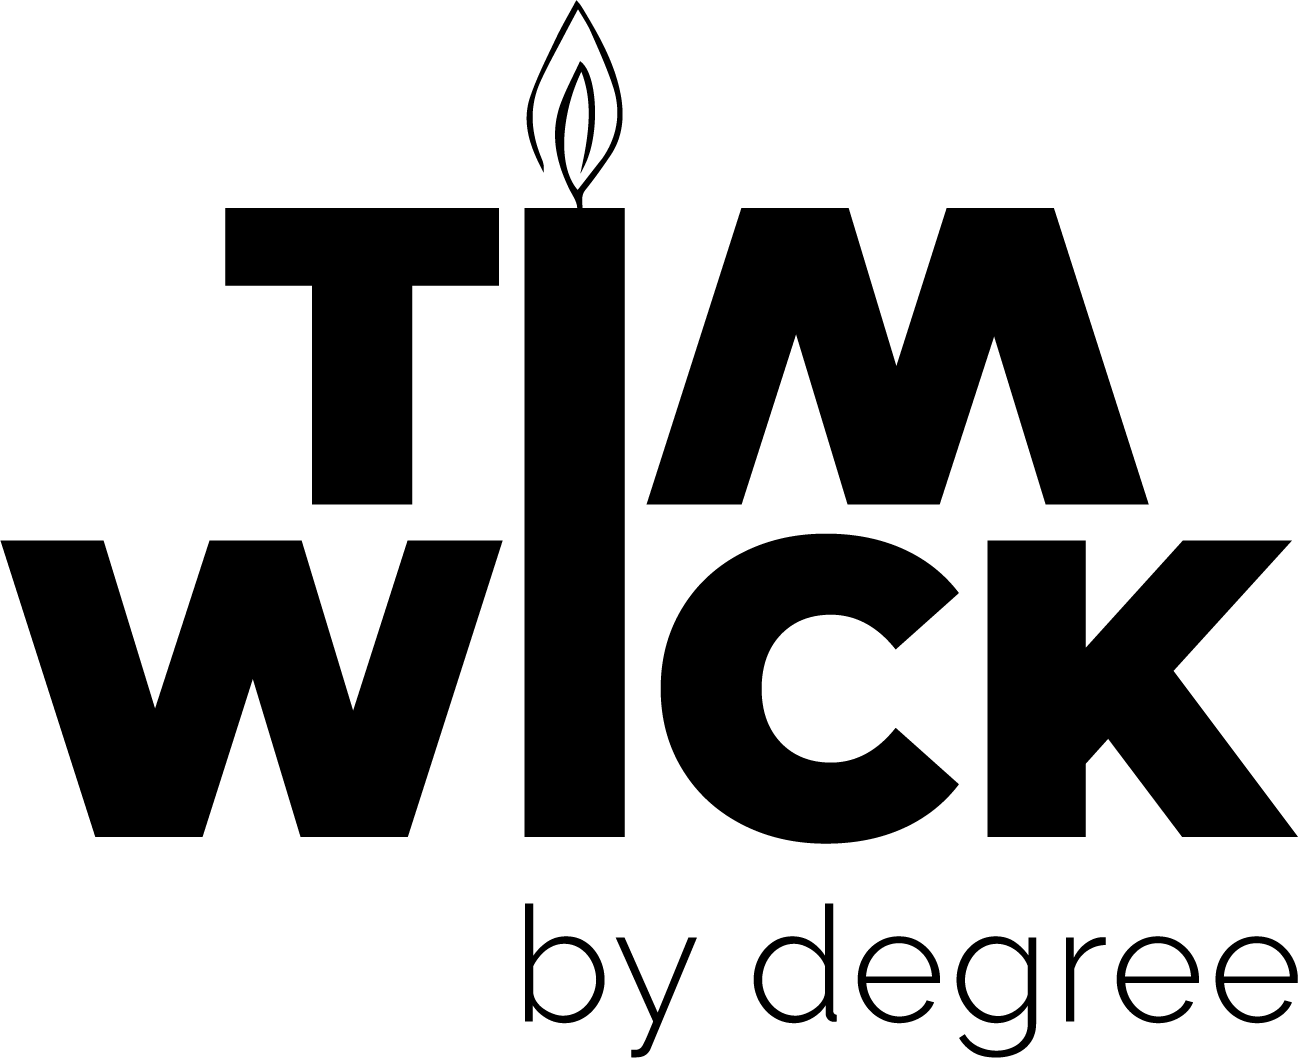 TIM WICK